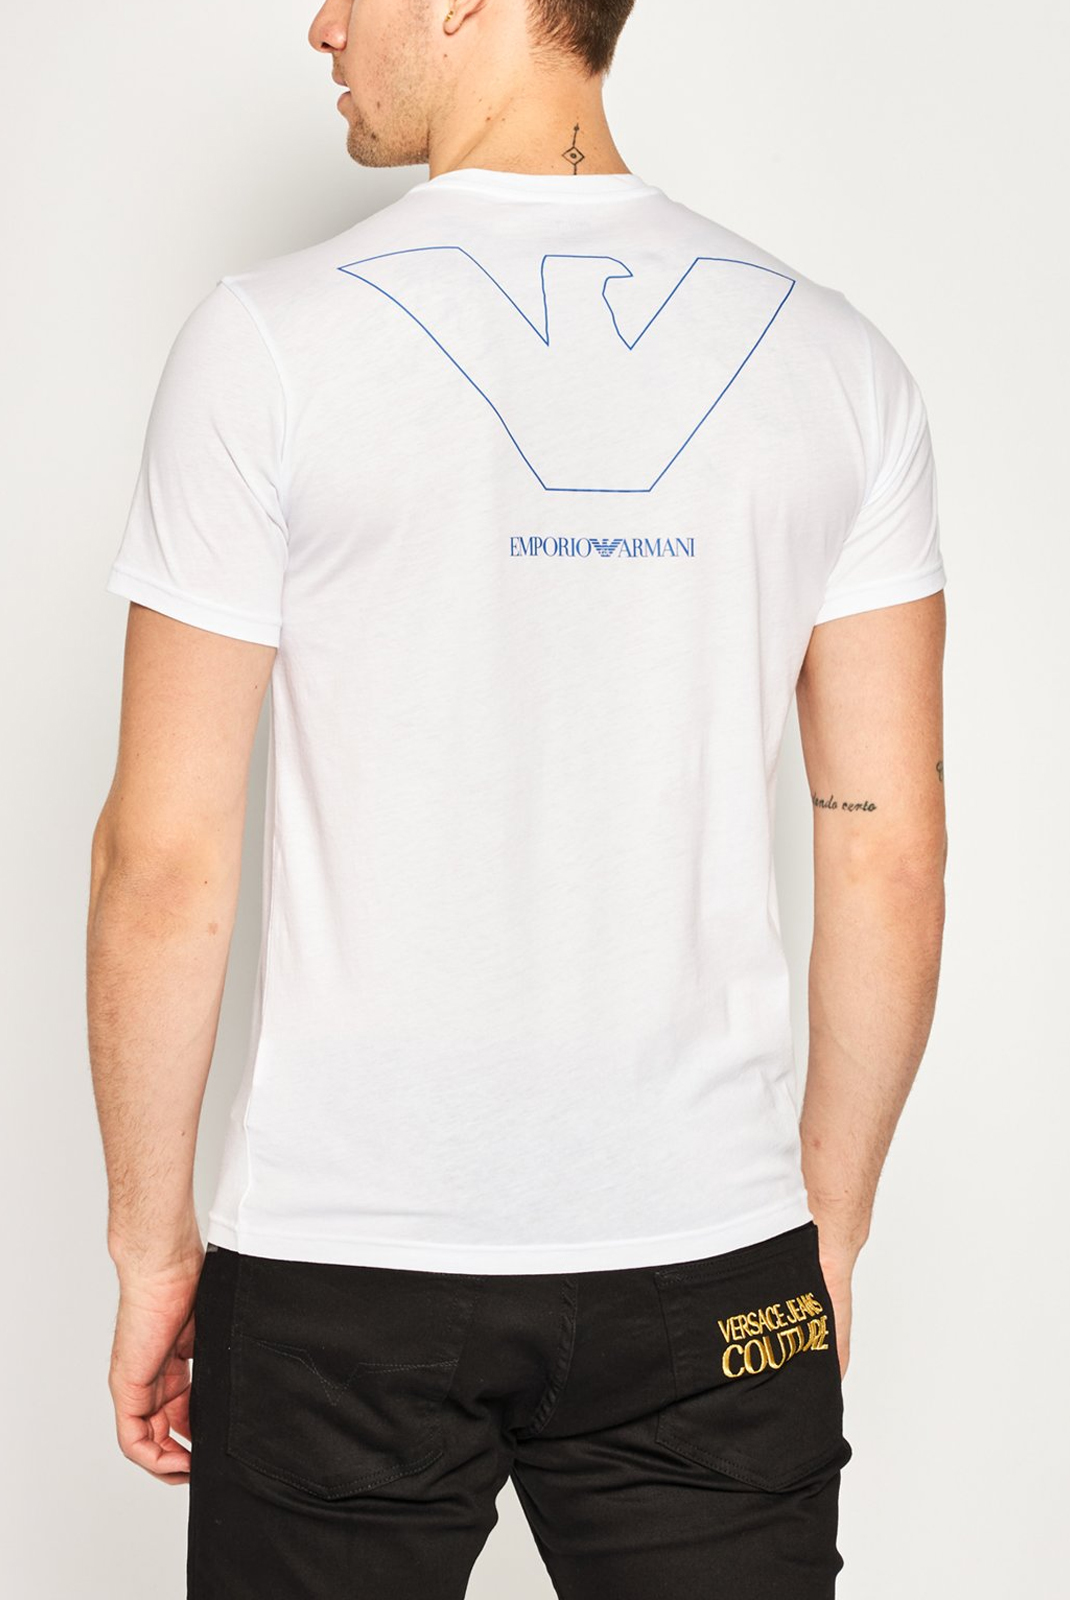 Emporio Armani Tee-shirt Blanc Manches Courtes Col Rond 111019 0p578 